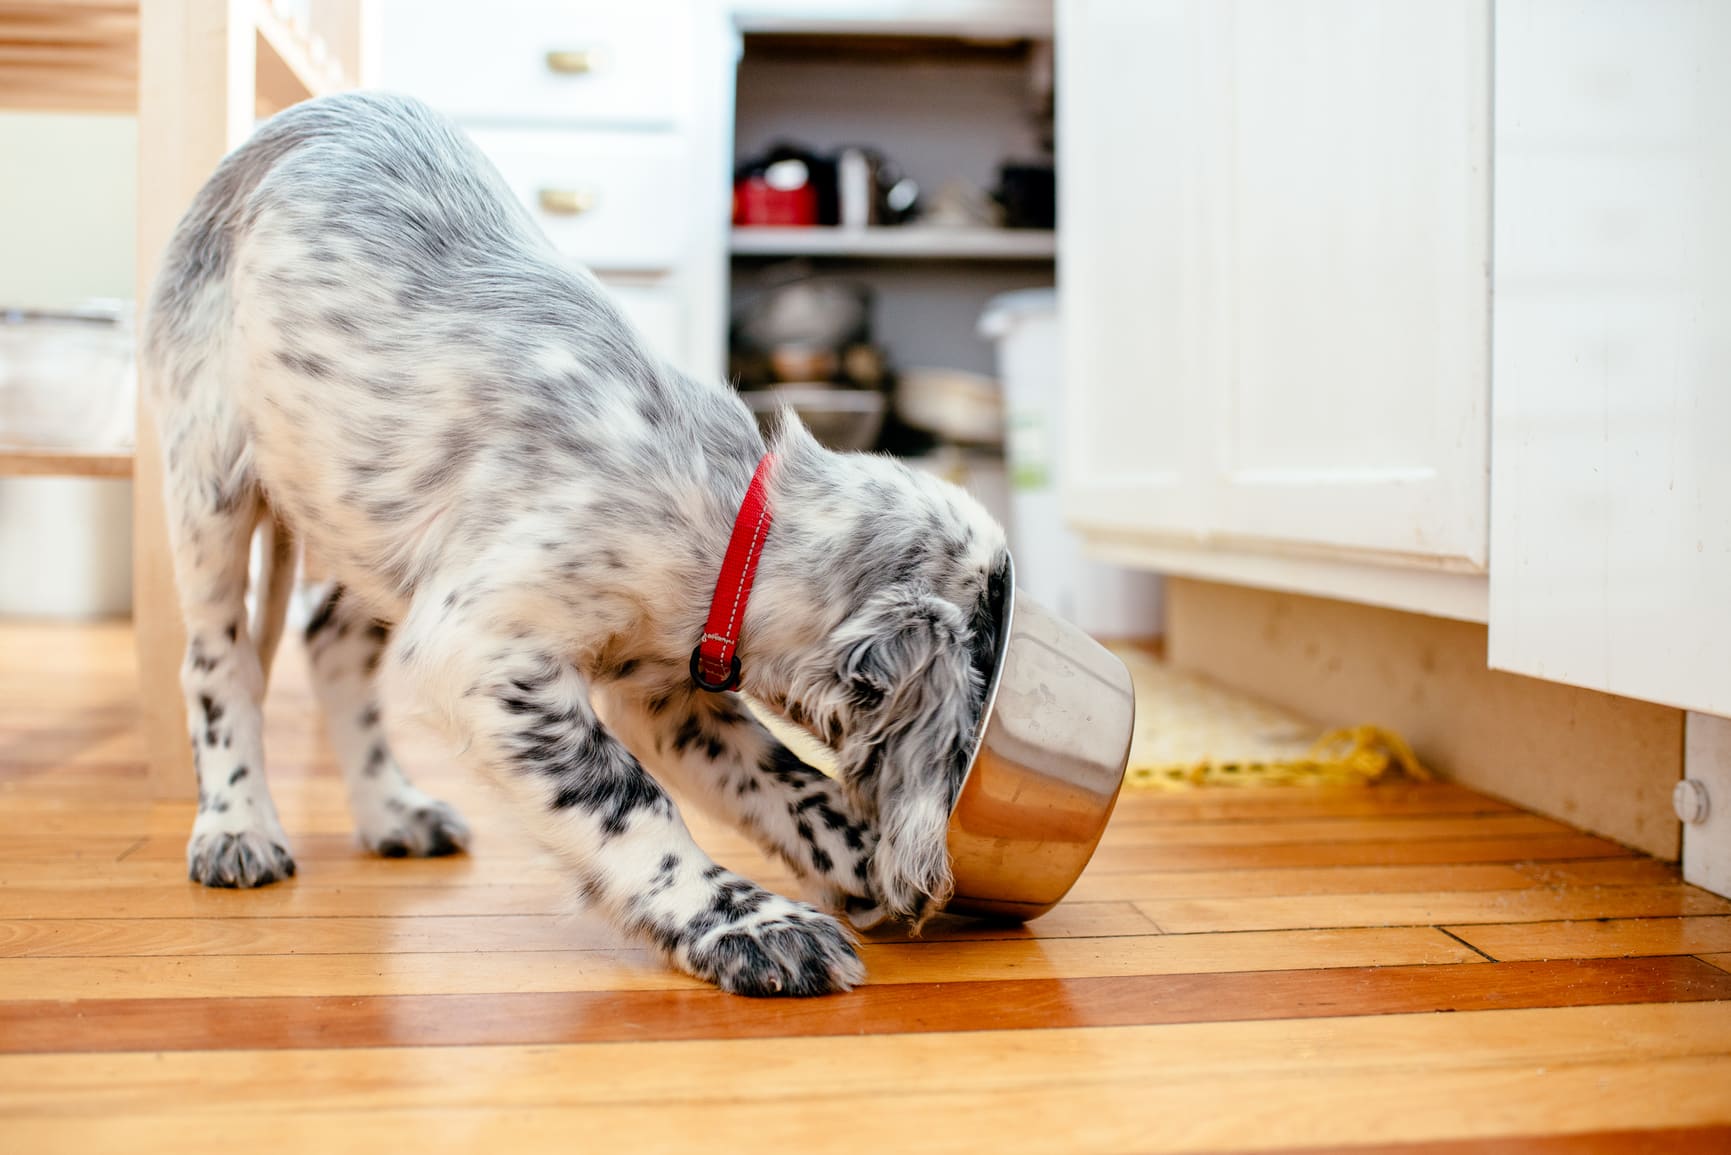 10 Dog Food Storage Ideas That Are Convenient Yet Stylish